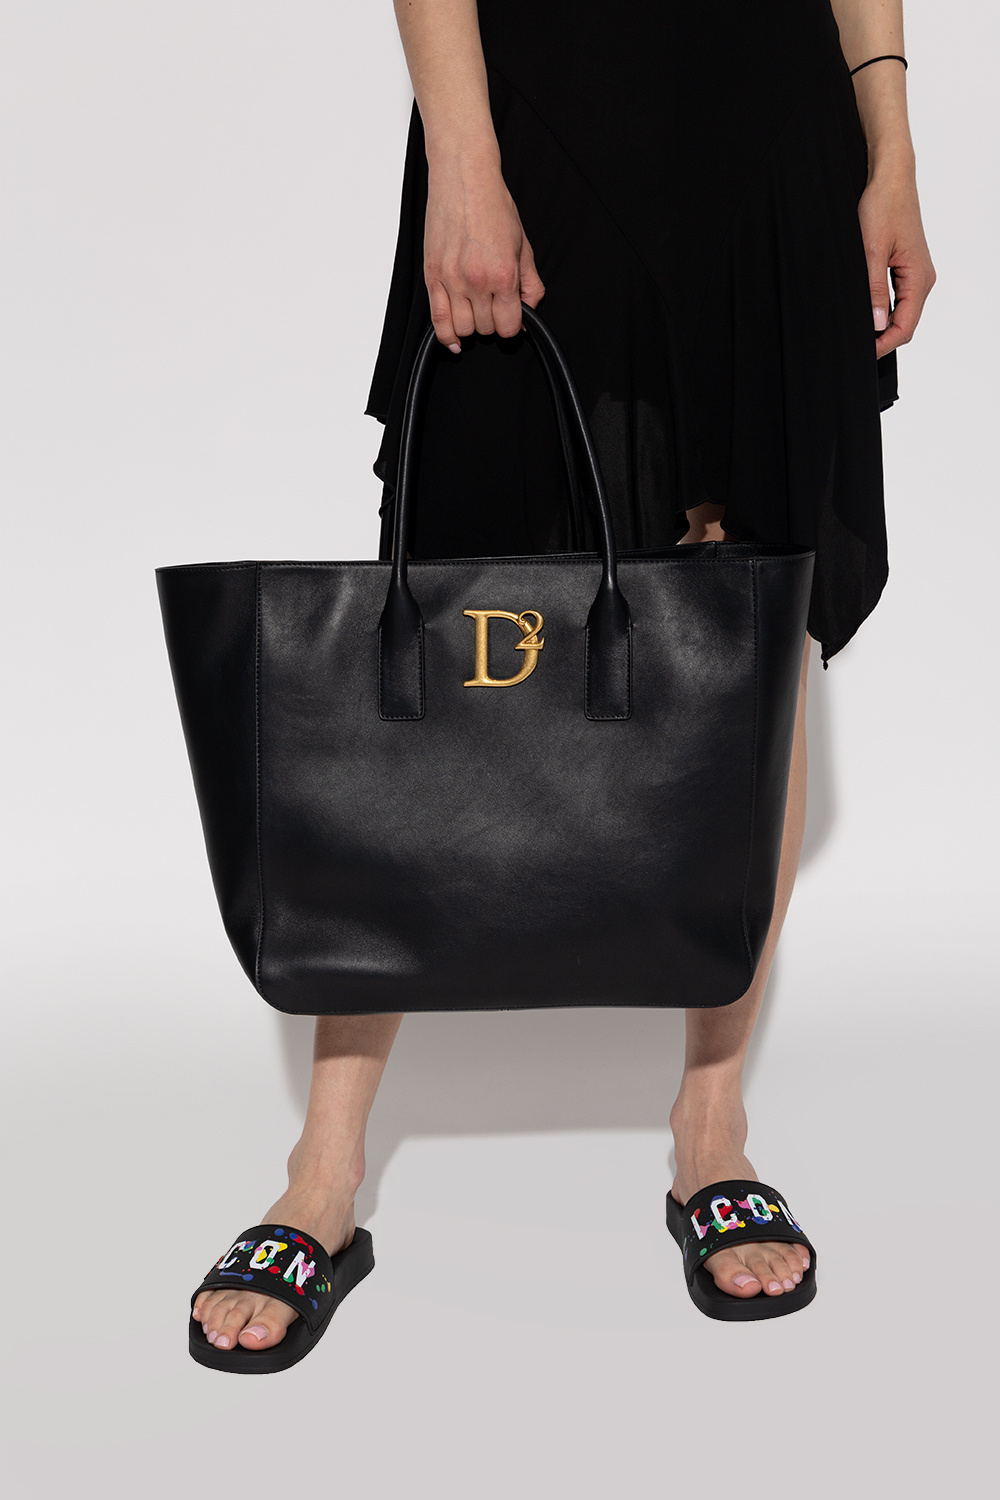 DKNY Carol Book Logo Fabric Tote Bag